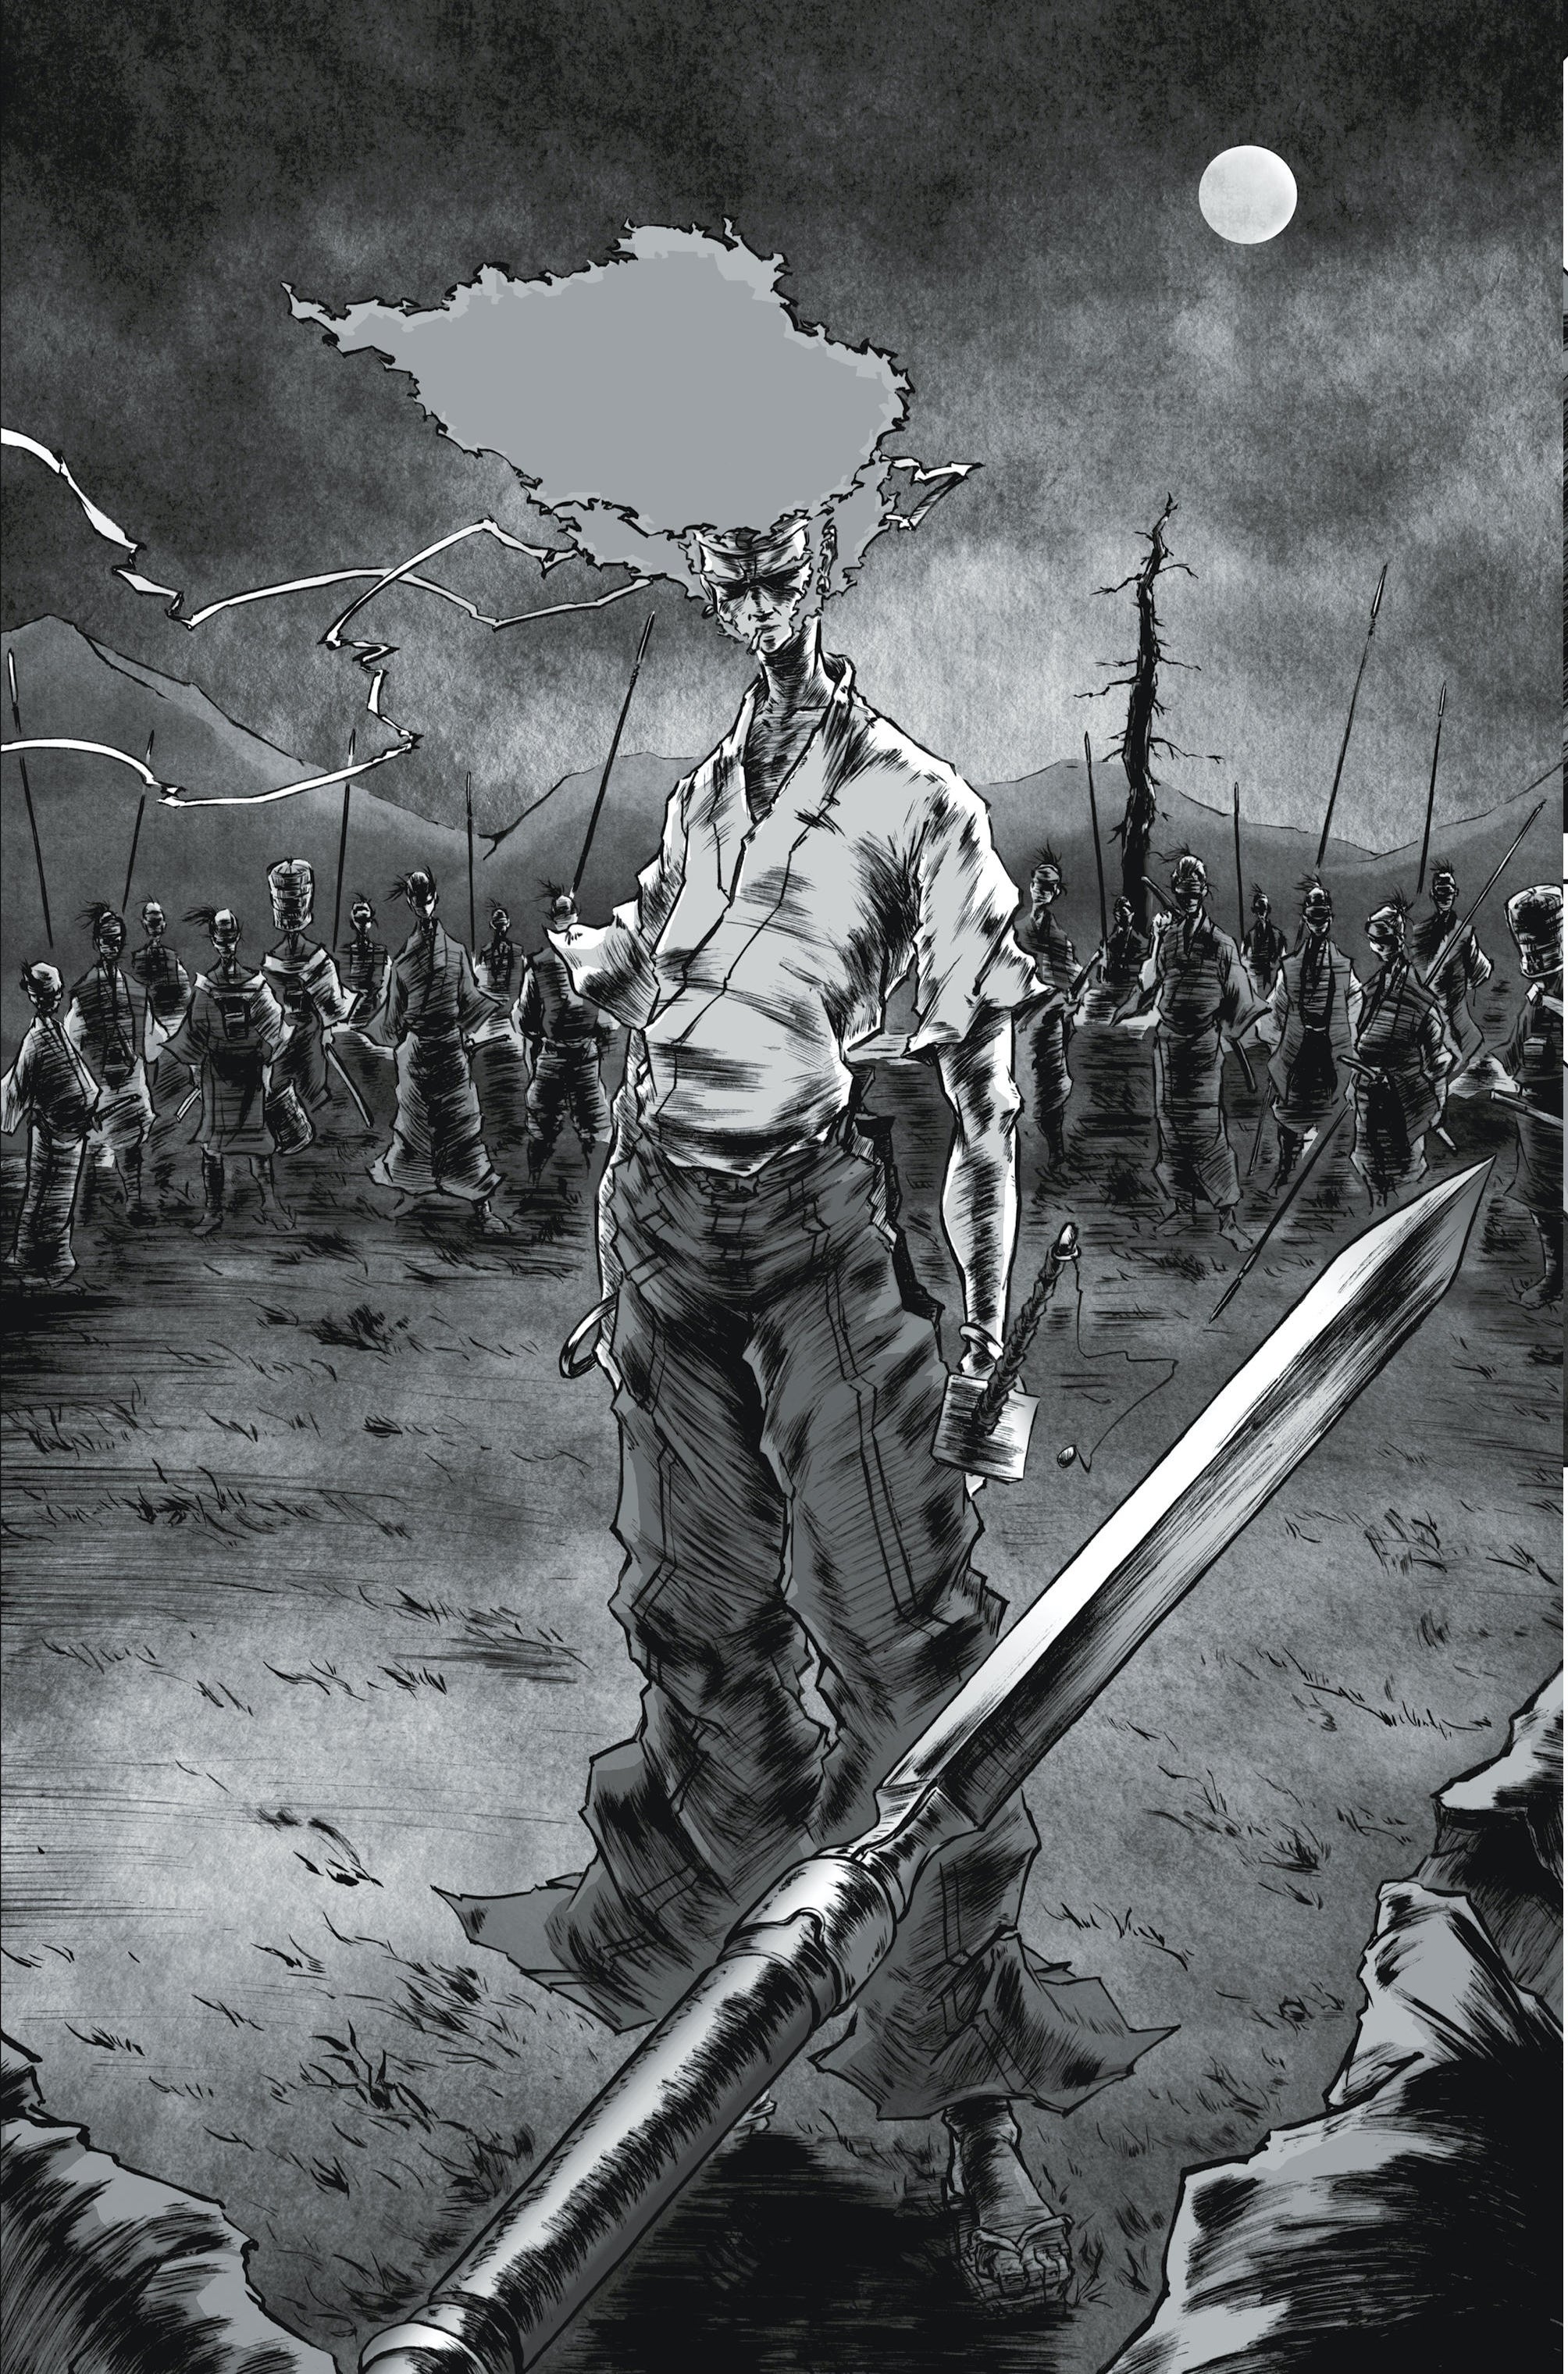 Afro Samurai Vol.1 (graphic Novel) - By Takashi Okazaki (paperback